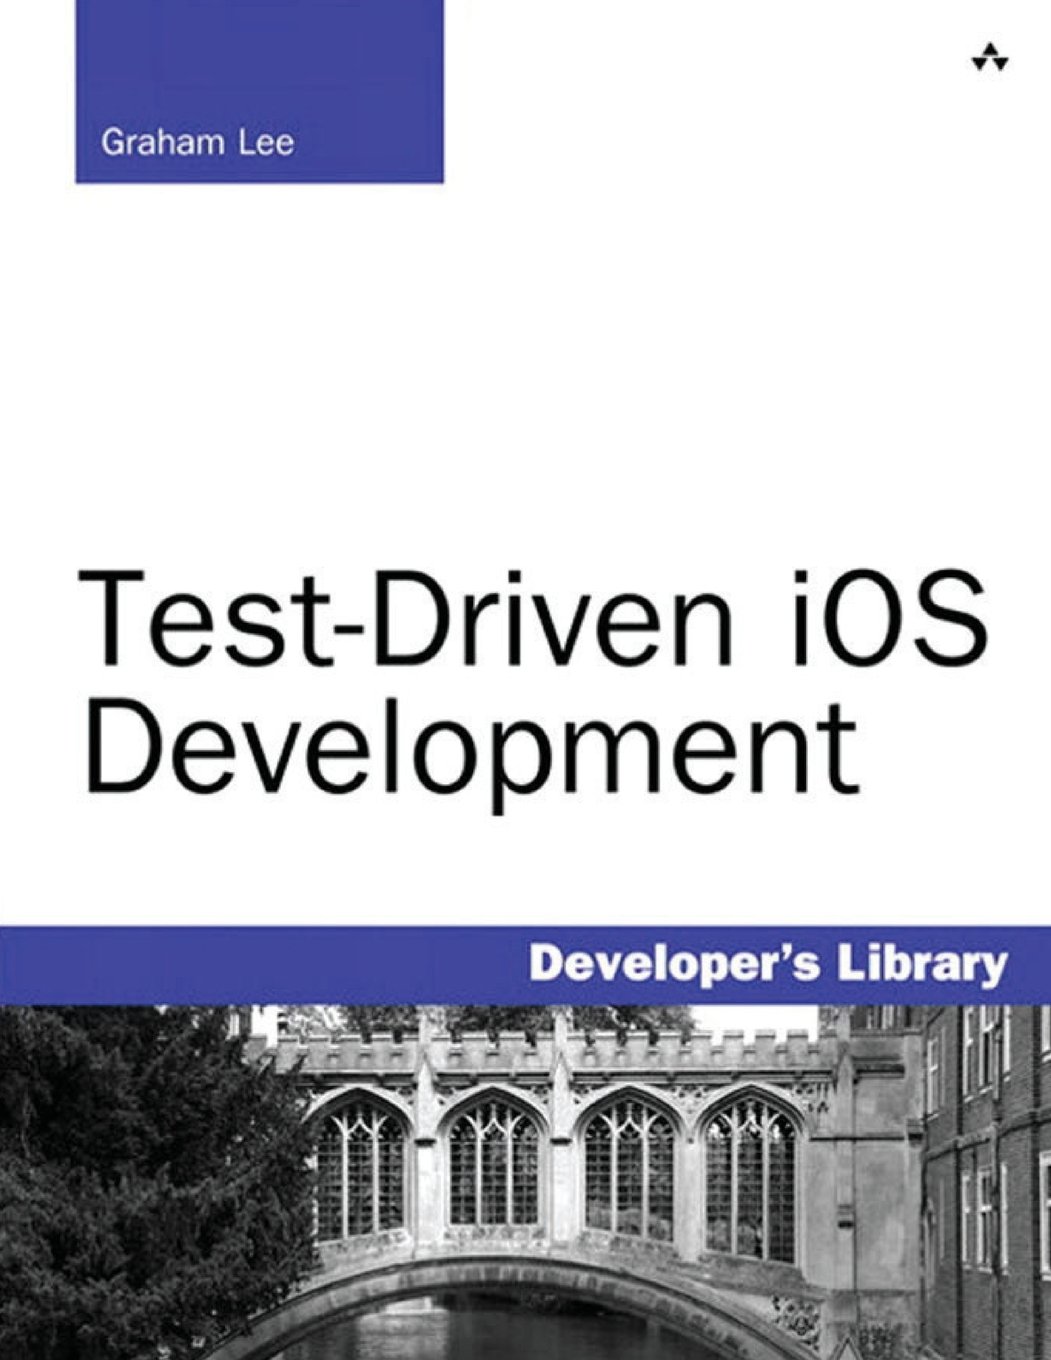 Test-Driven iOS Development (Developer's Library)